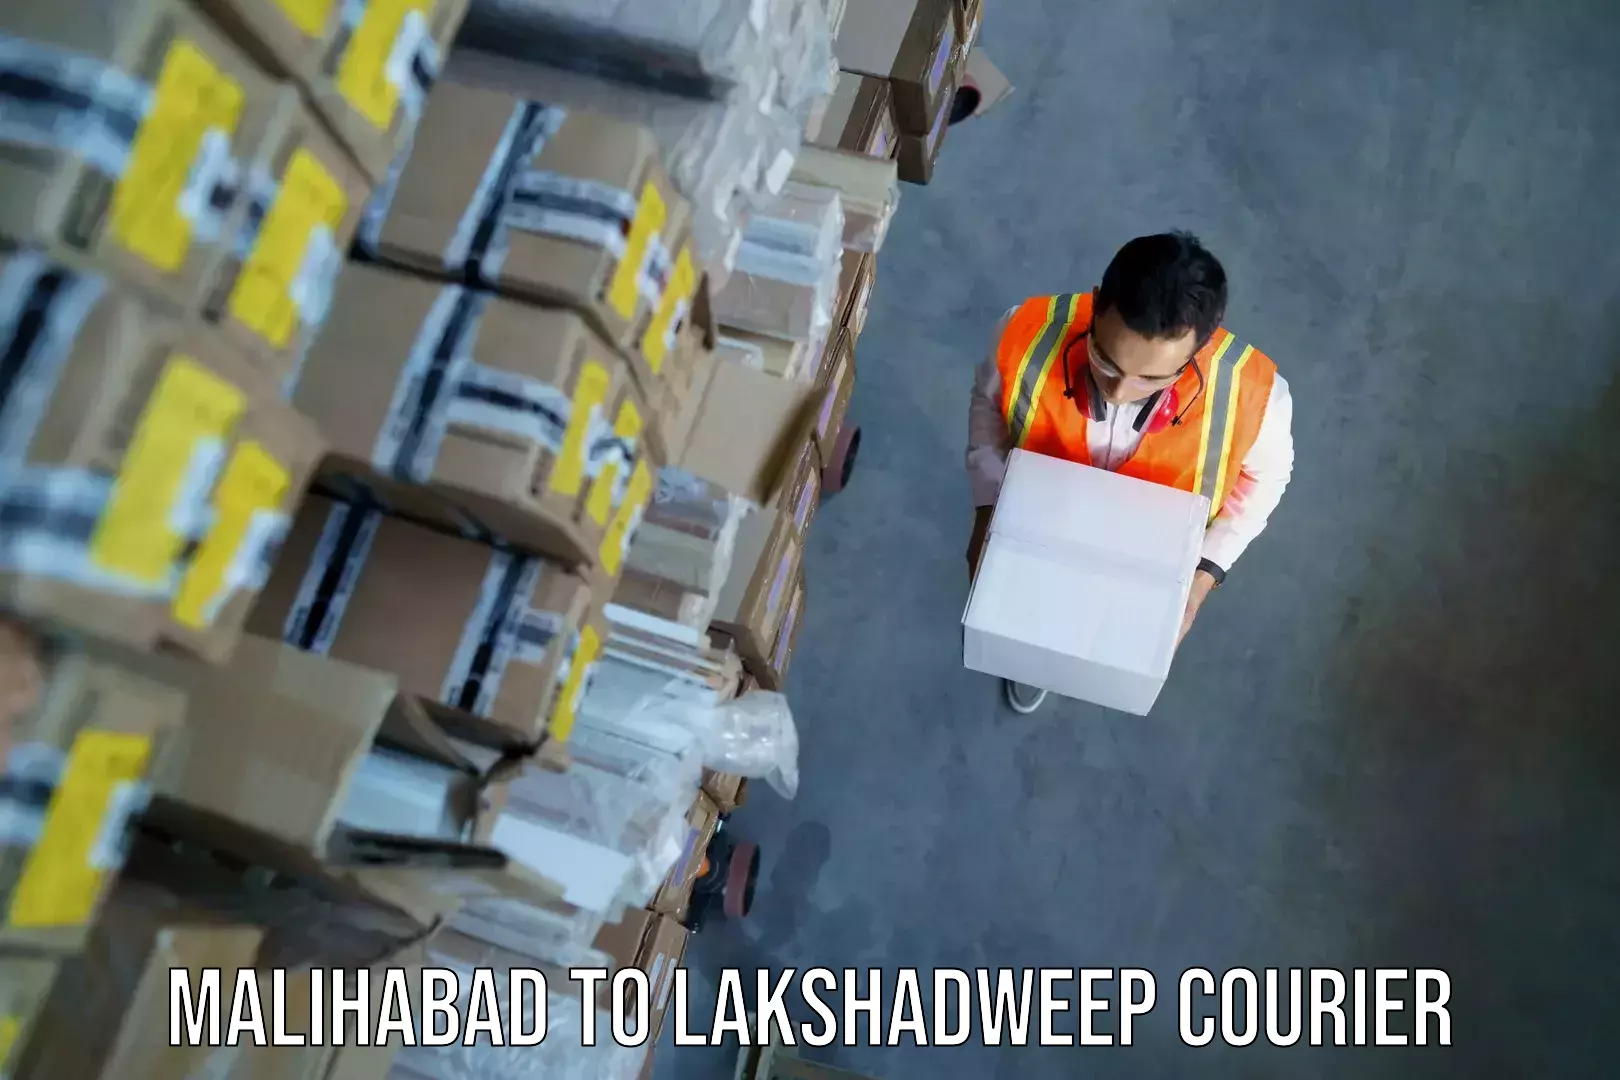 Luggage shipment specialists Malihabad to Lakshadweep